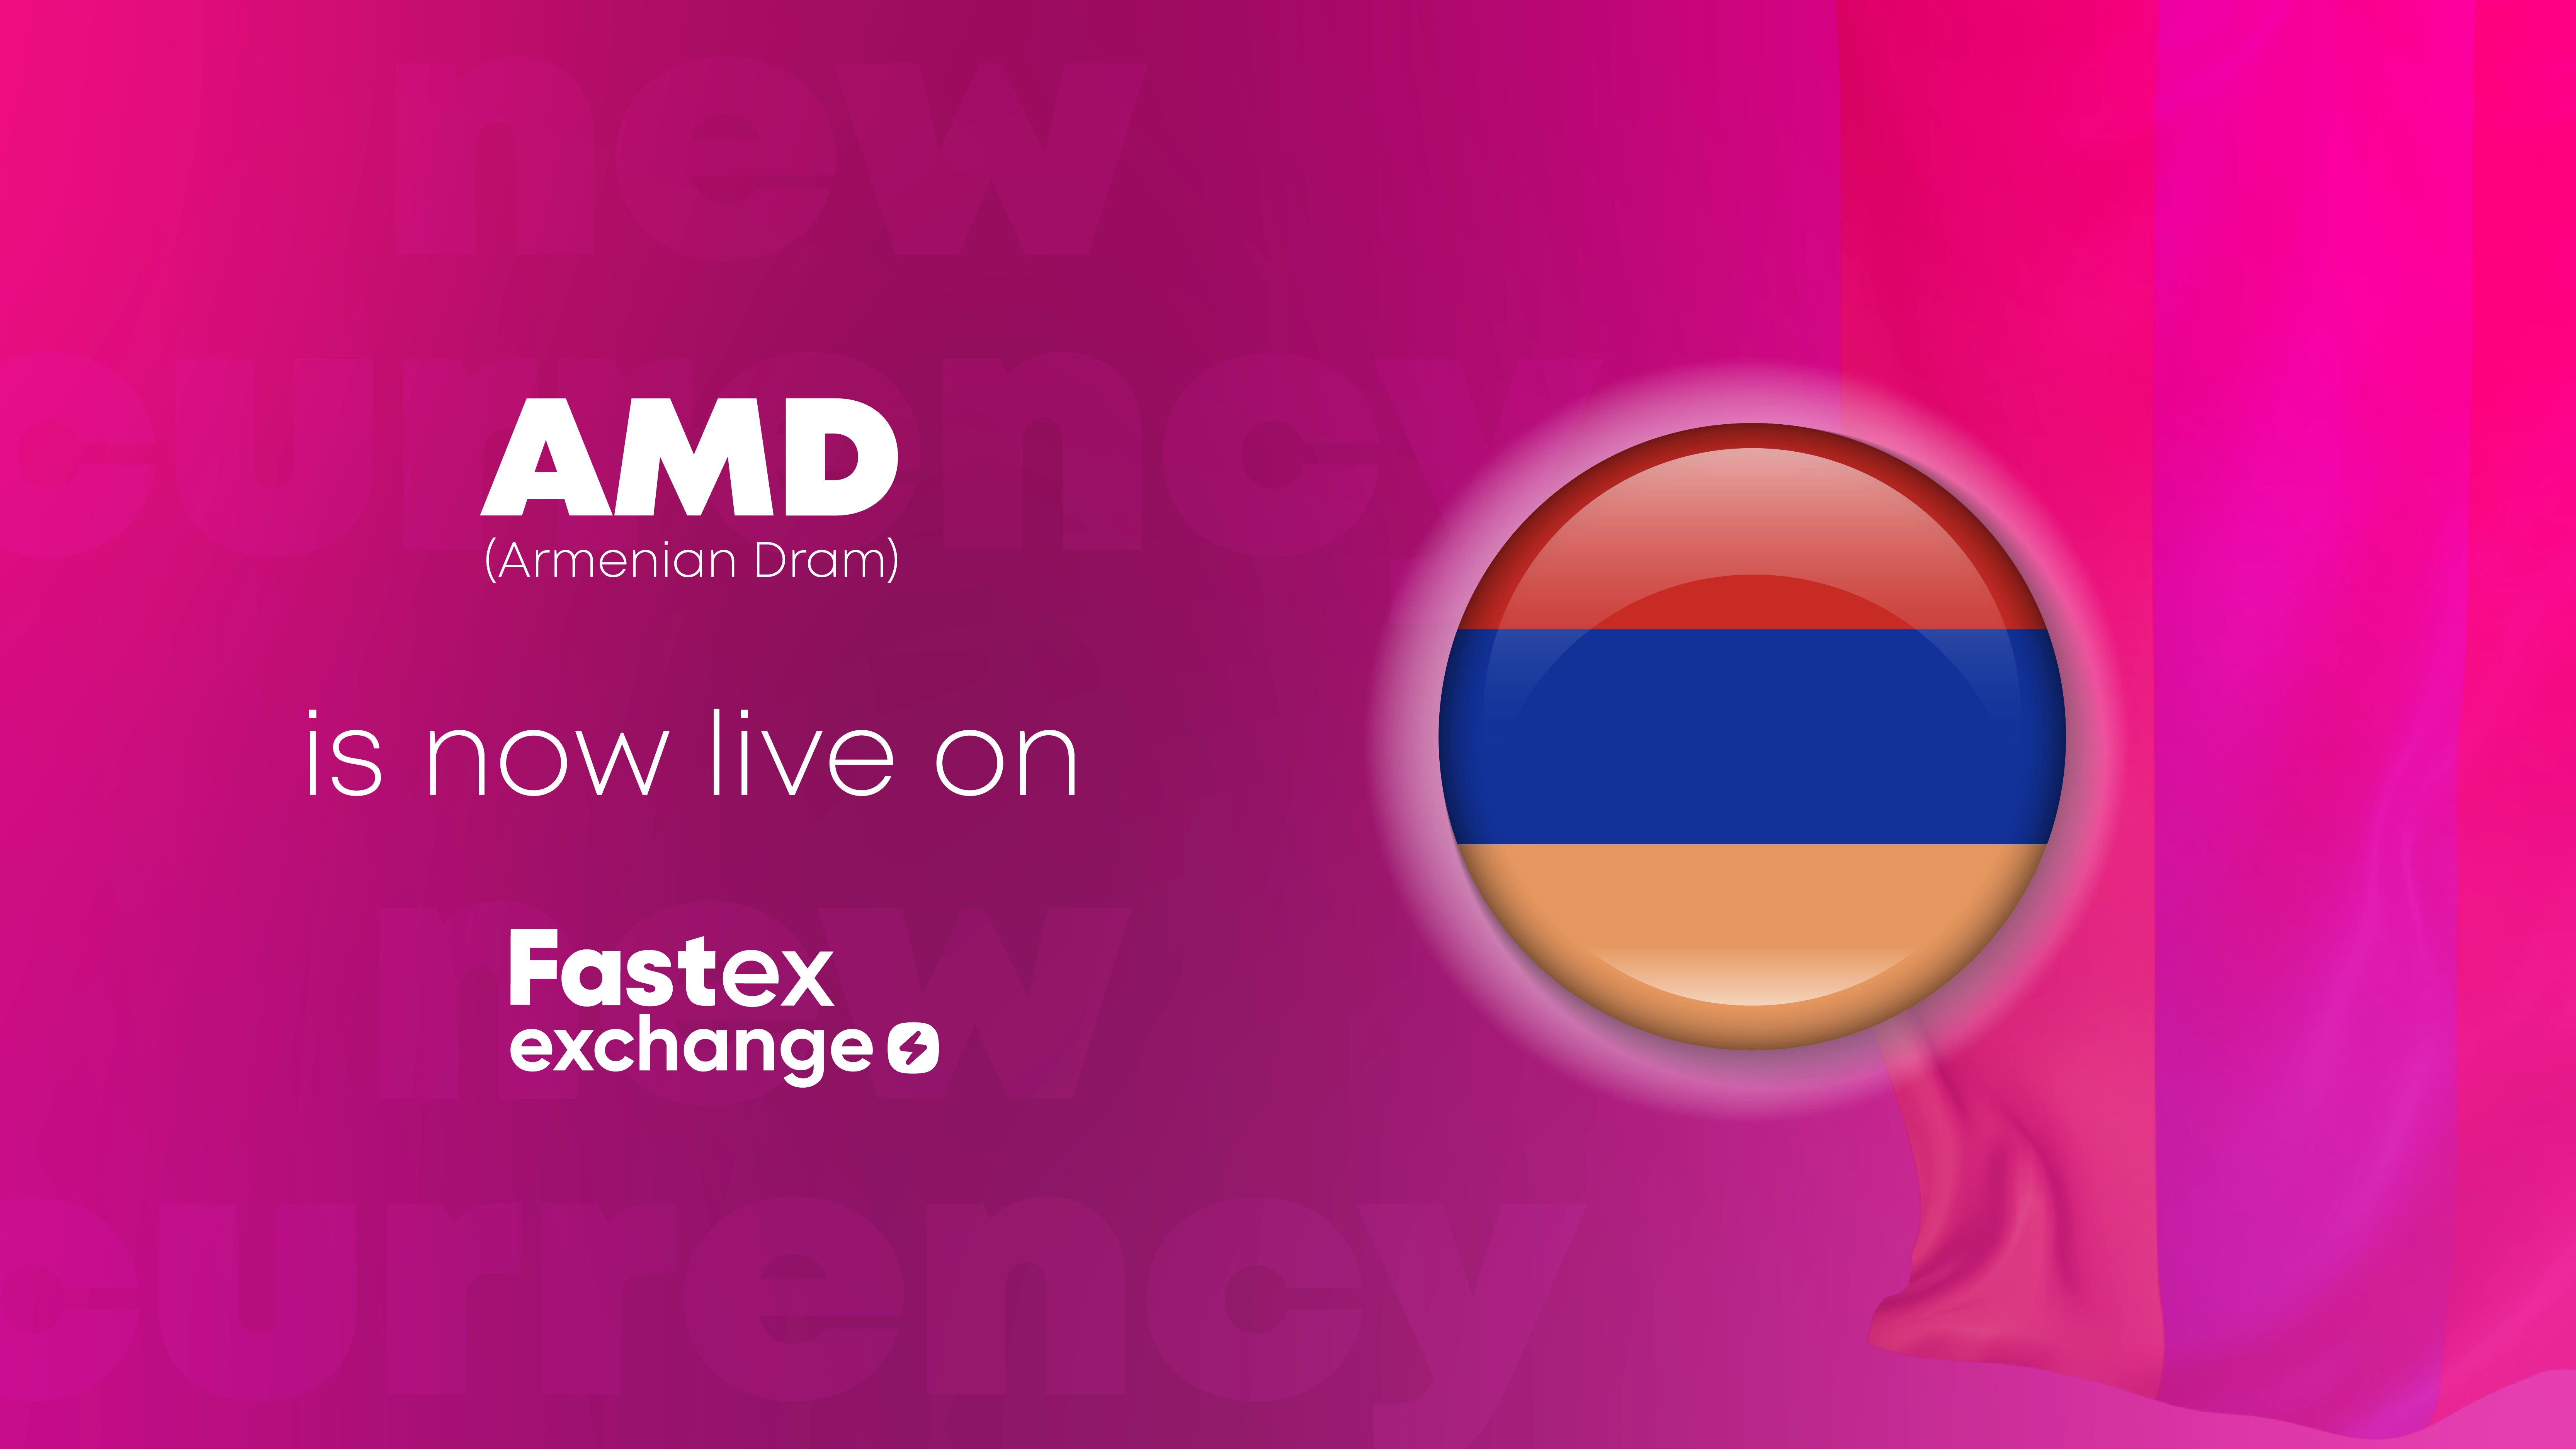 Fastex Intercambio integra la Moneda Nacional de Armenia AMD